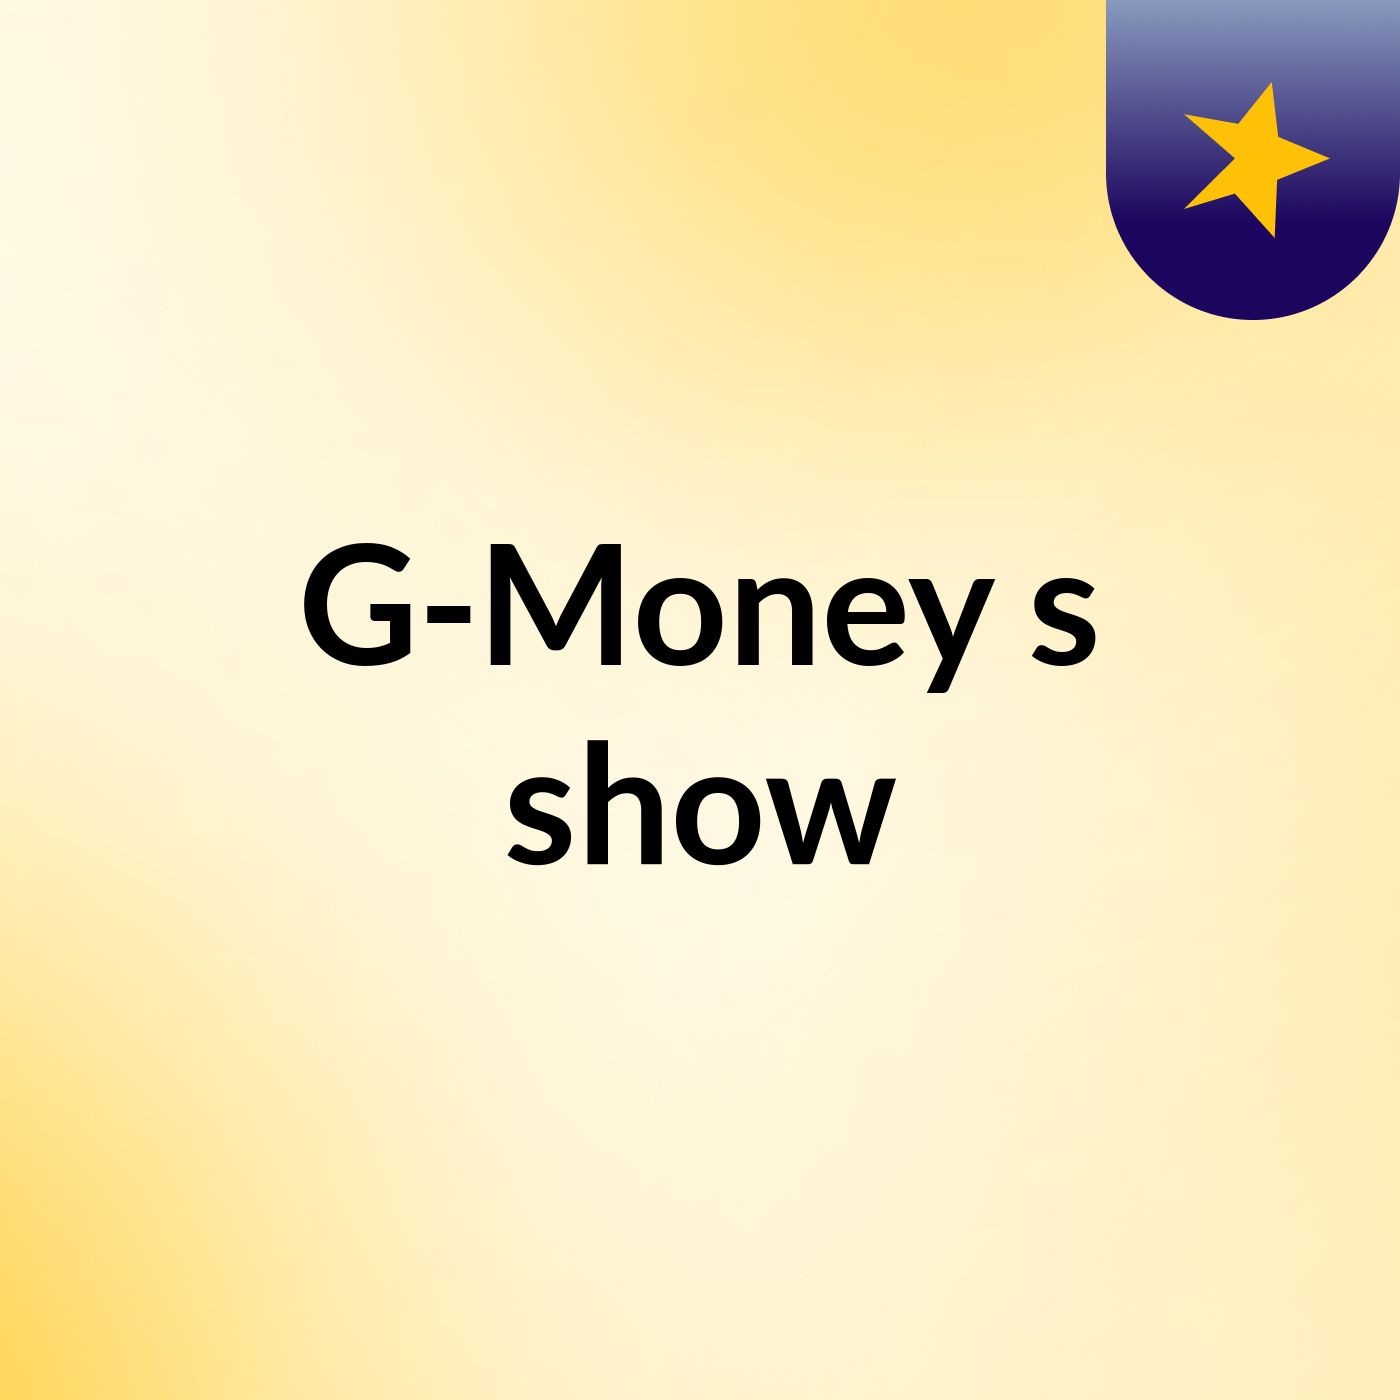 G-Money's show